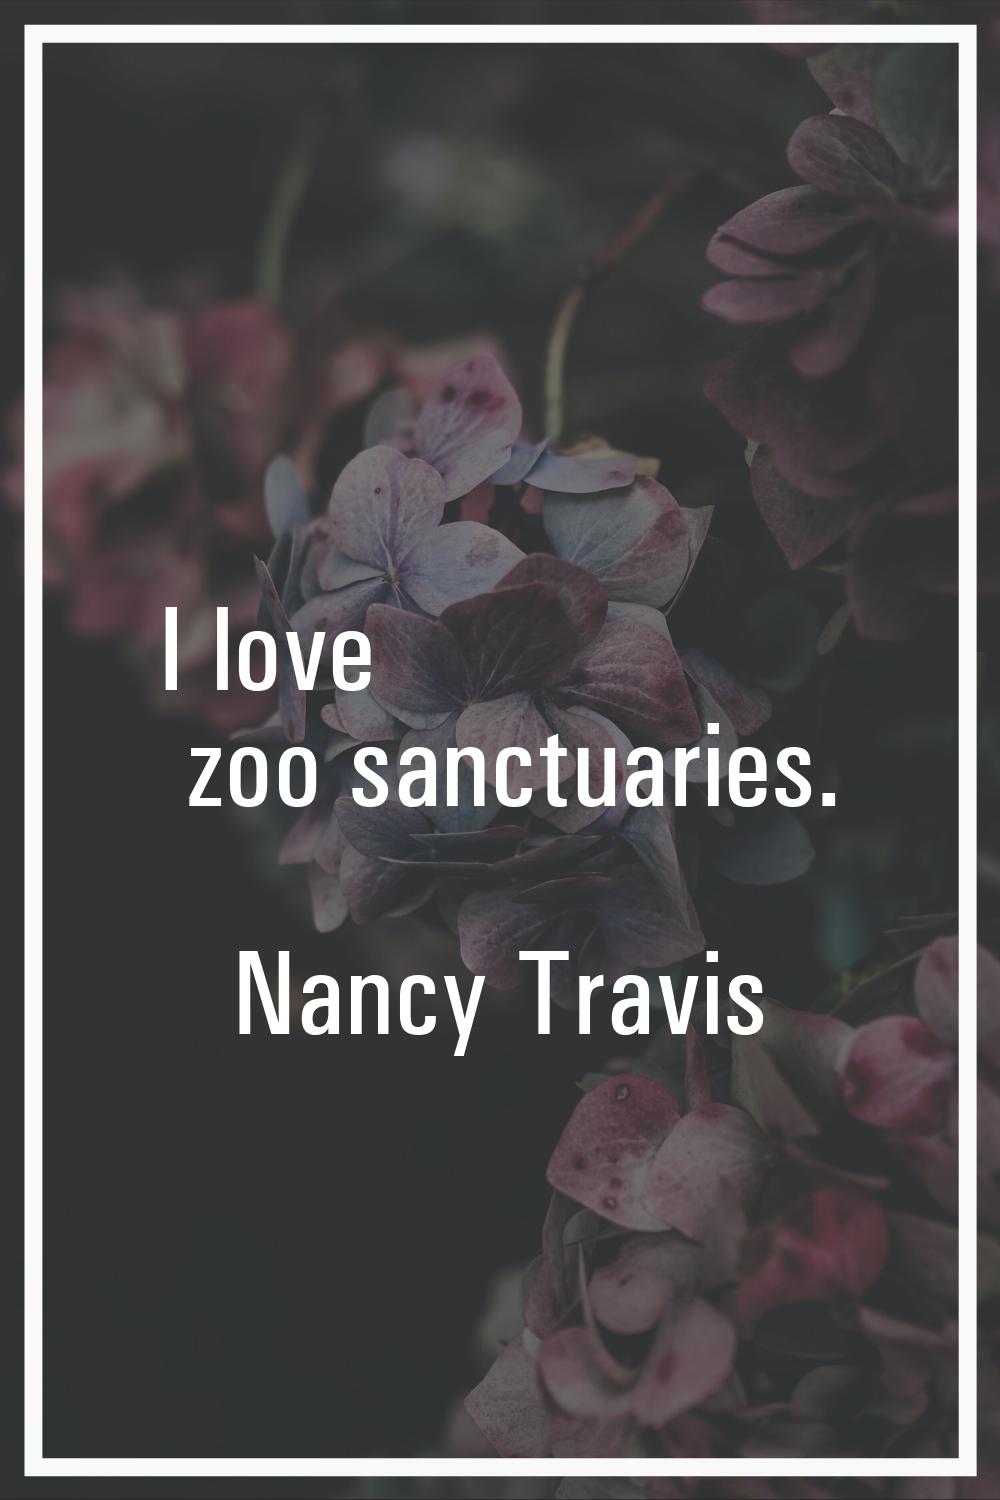 I love zoo sanctuaries.